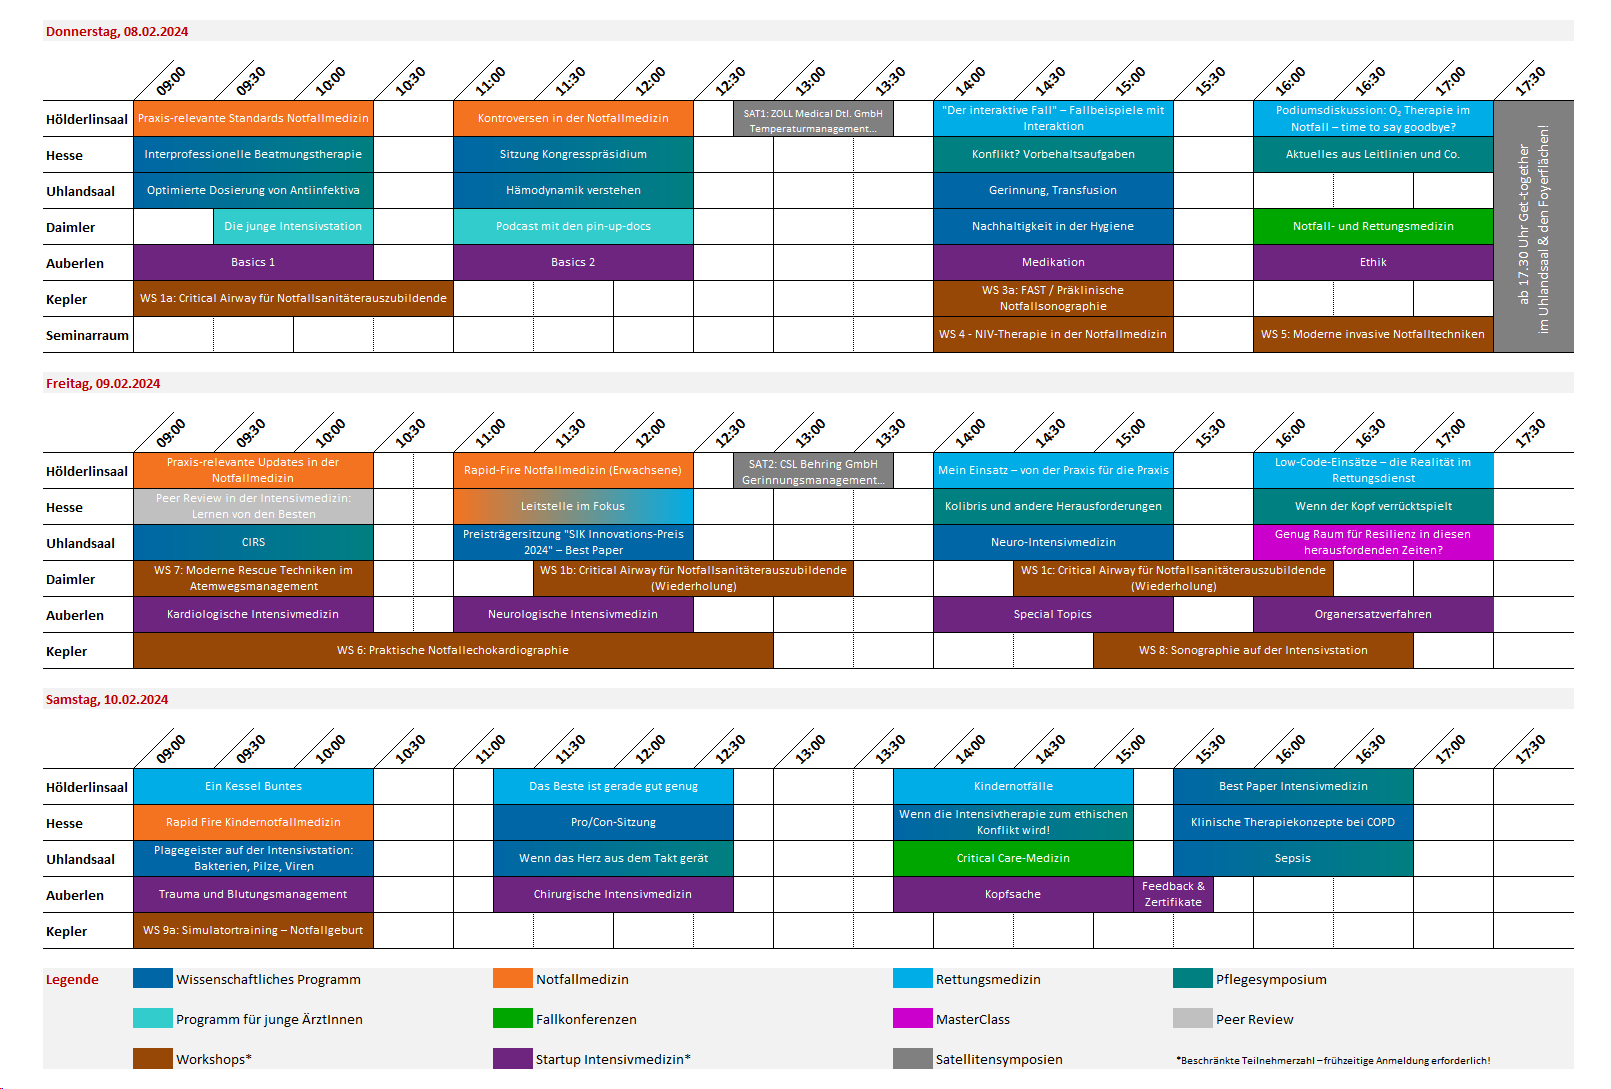 SIK 2023 Timetable